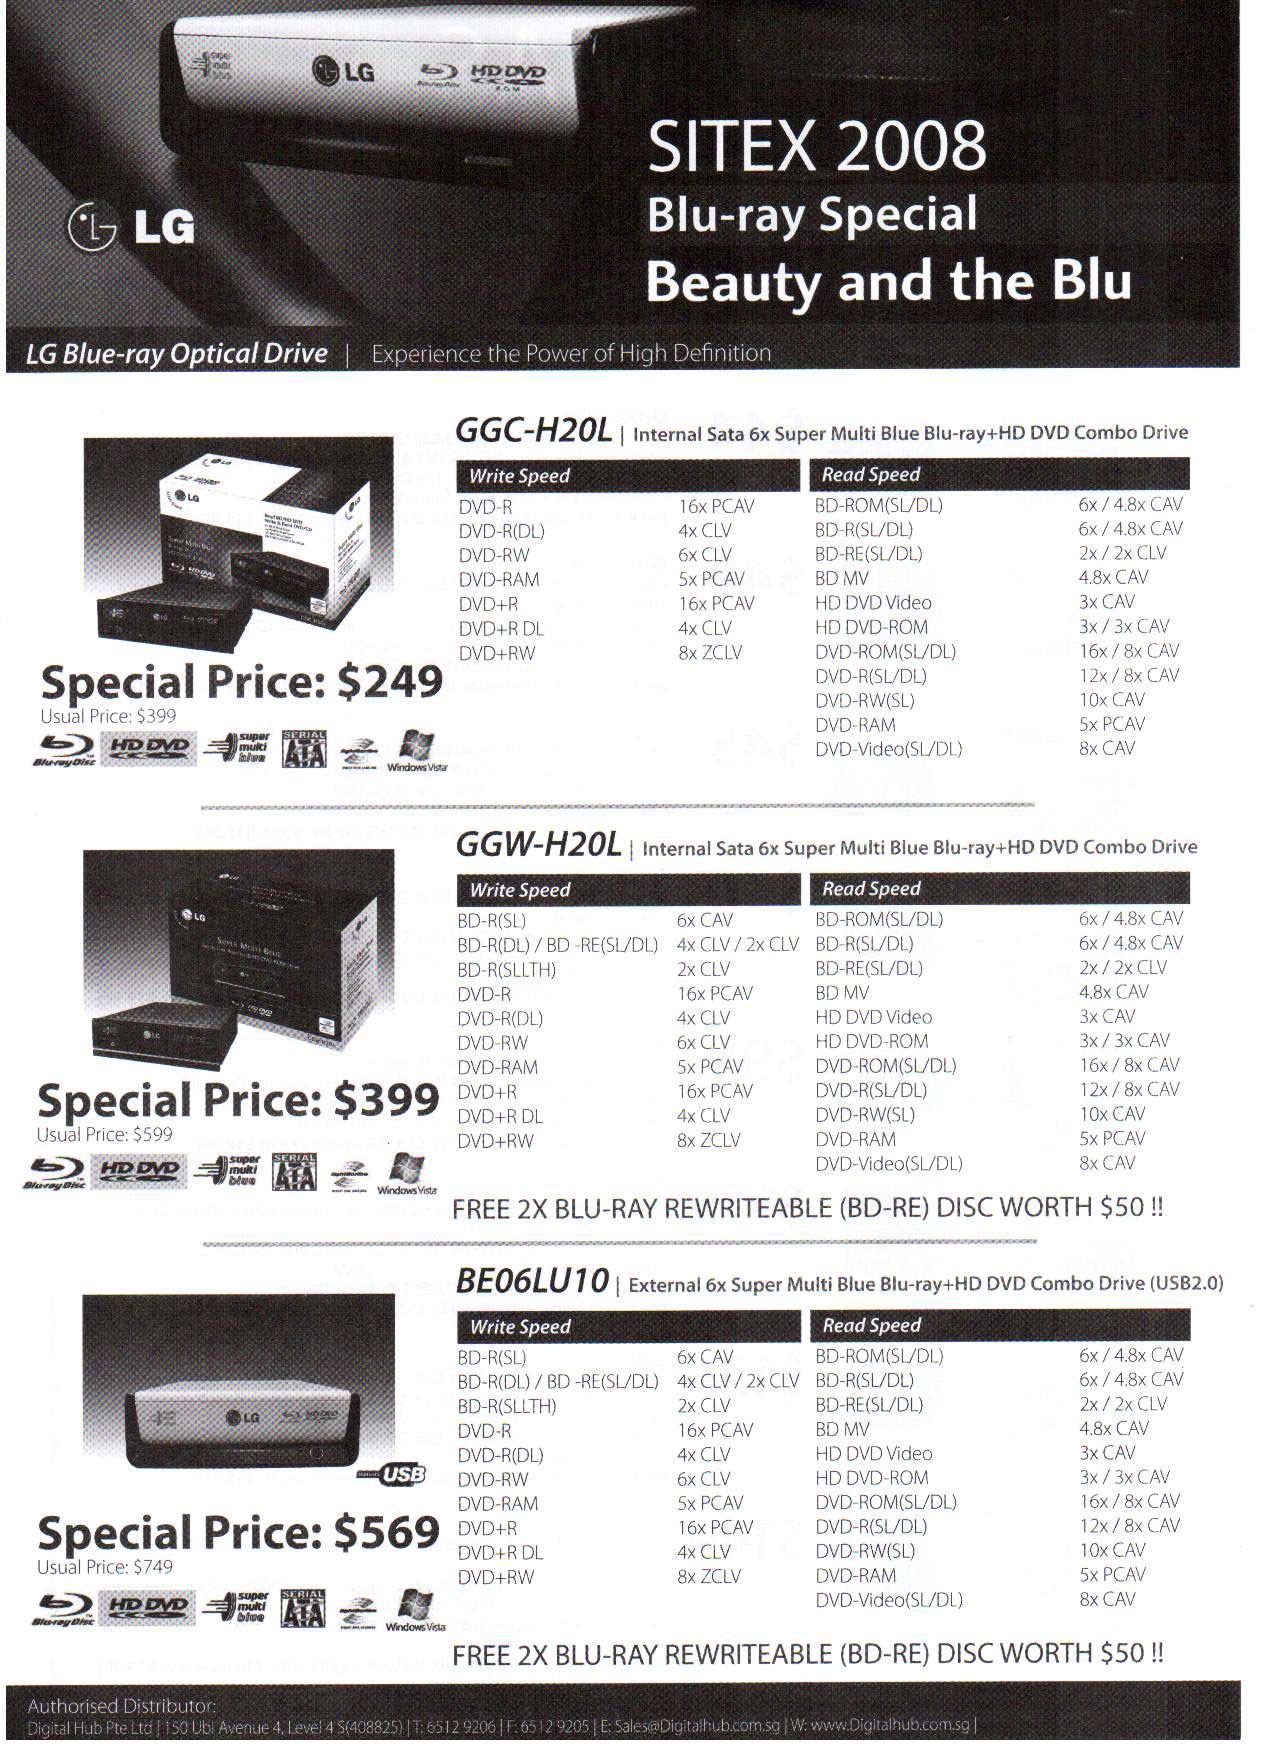 Sitex 2008 price list image brochure of LG Blu Ray Drives 4